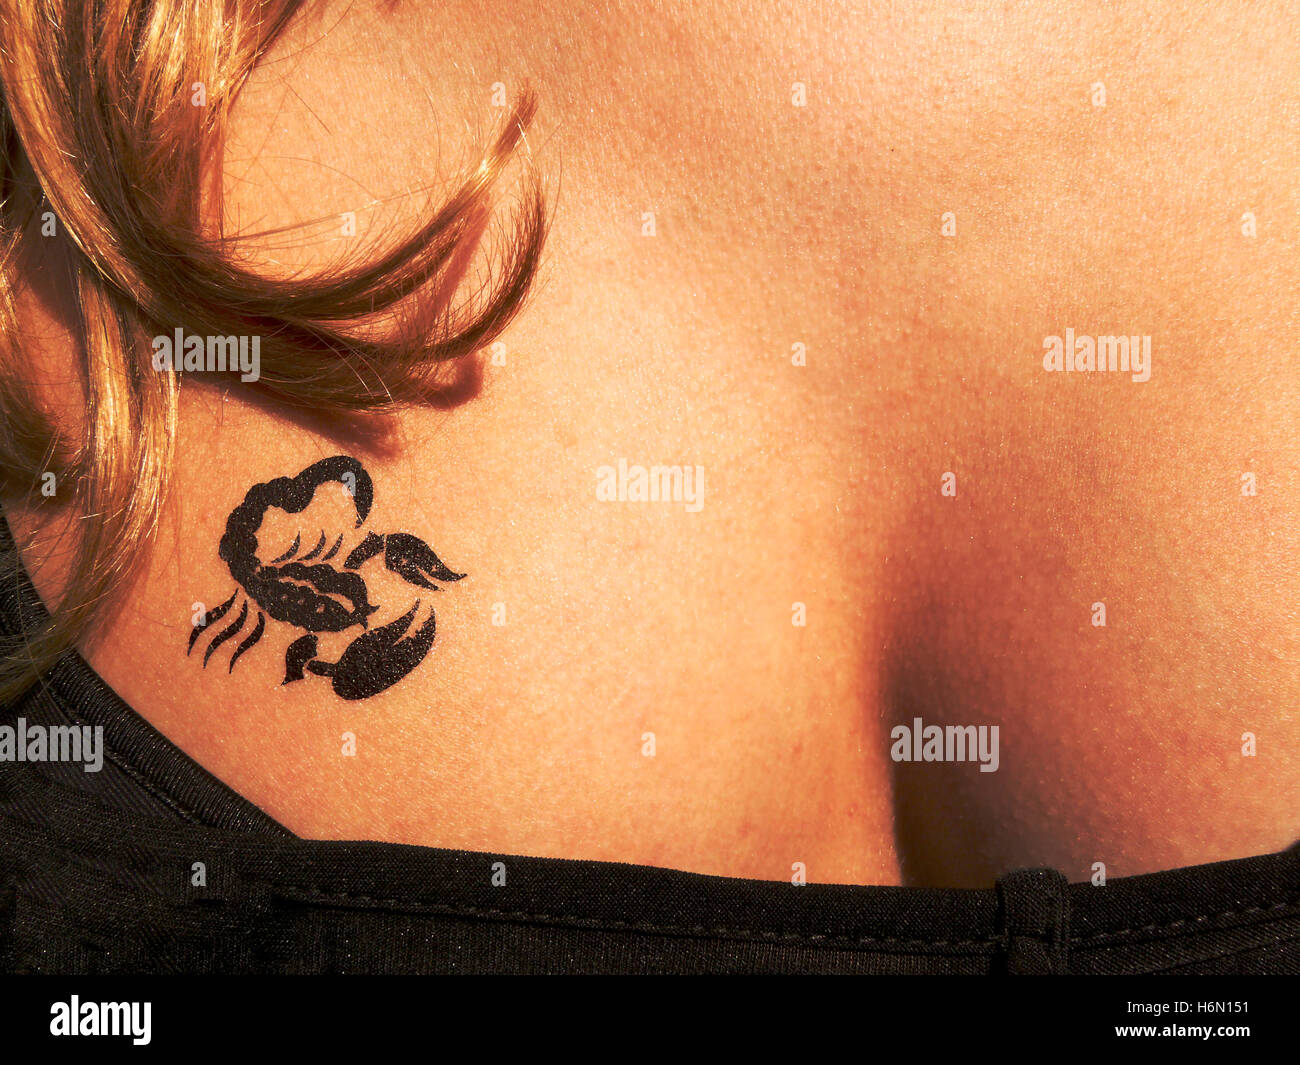 tattoo Stock Photo